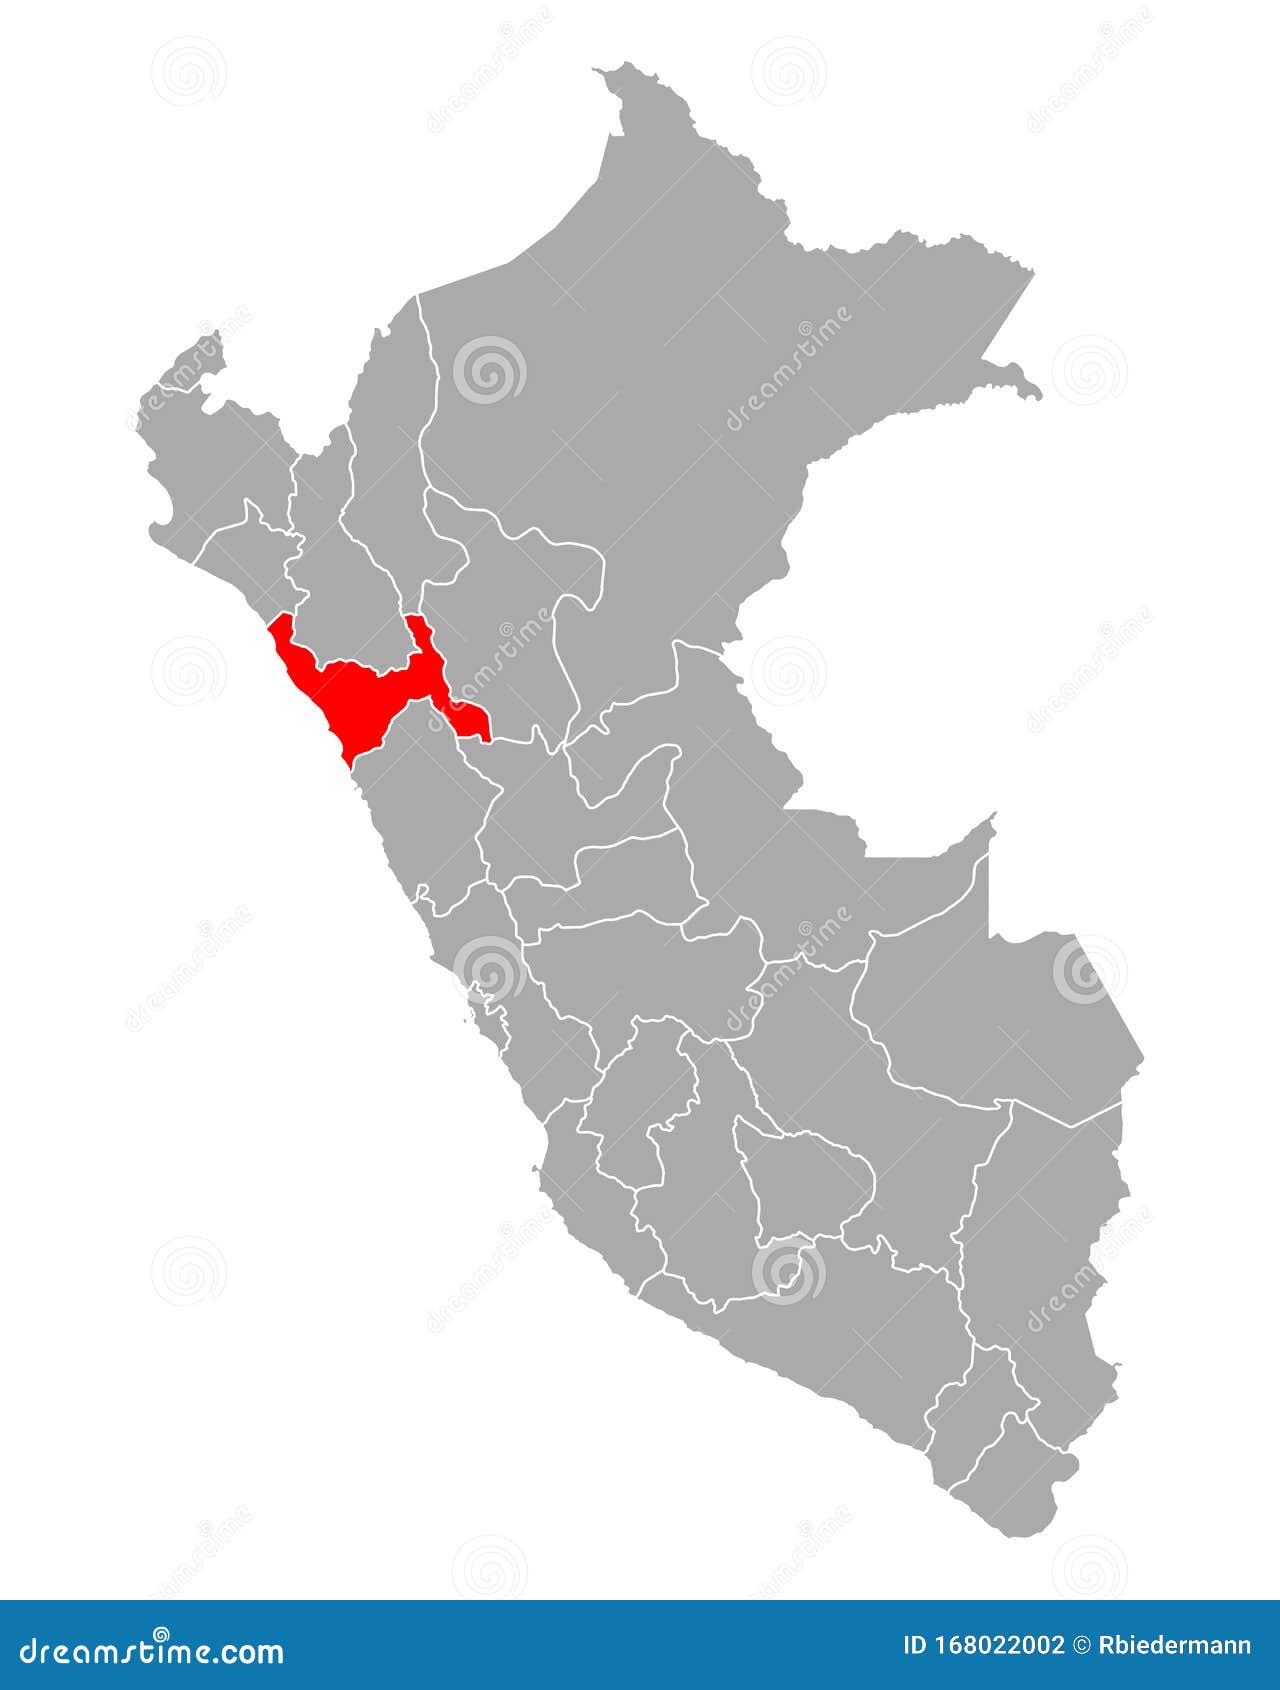 map of la libertad in peru